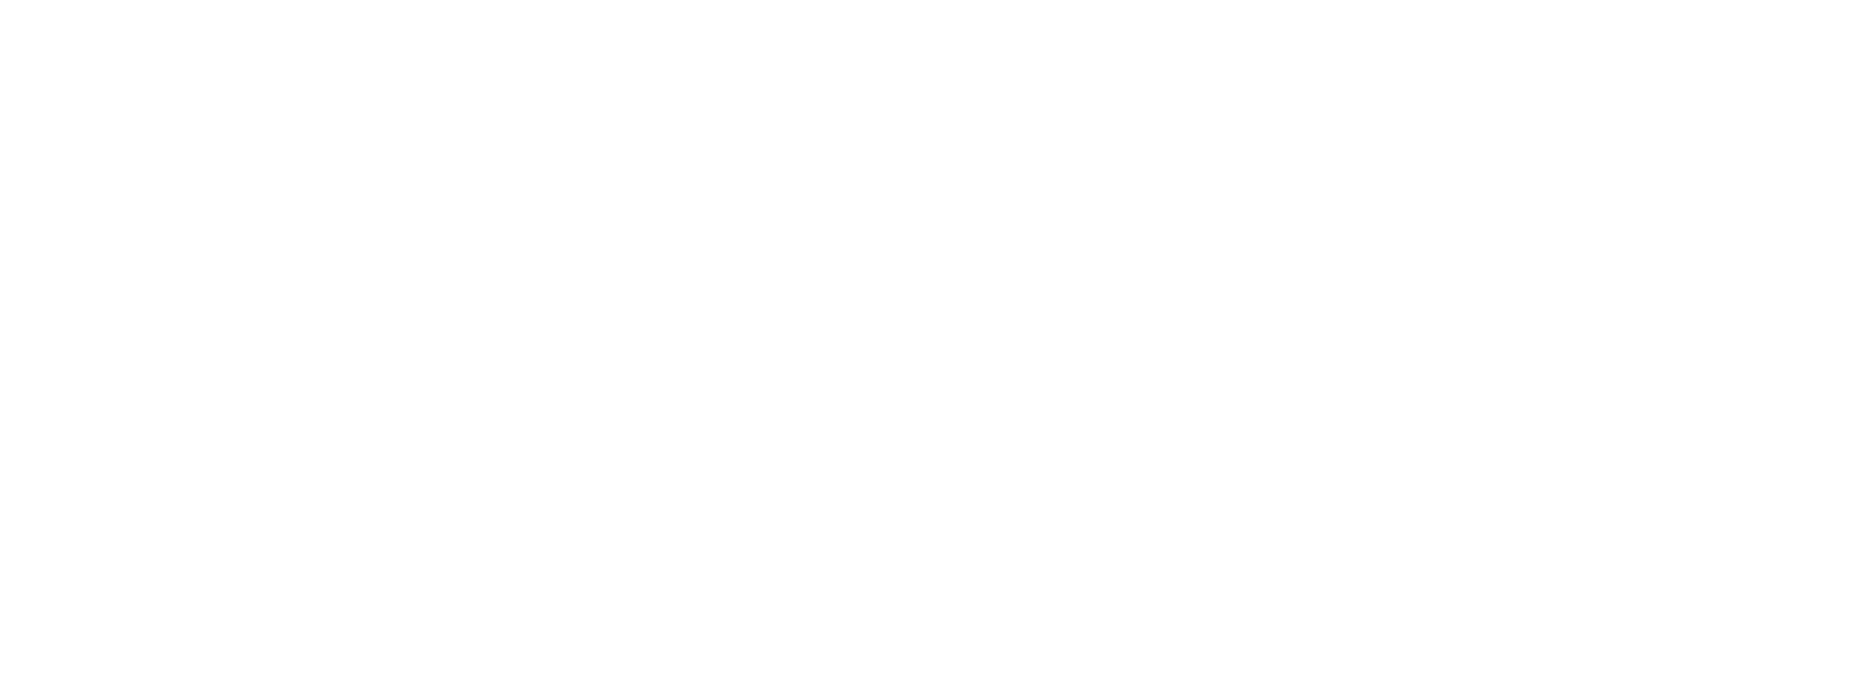 BASF India logo large for dark backgrounds (transparent PNG)